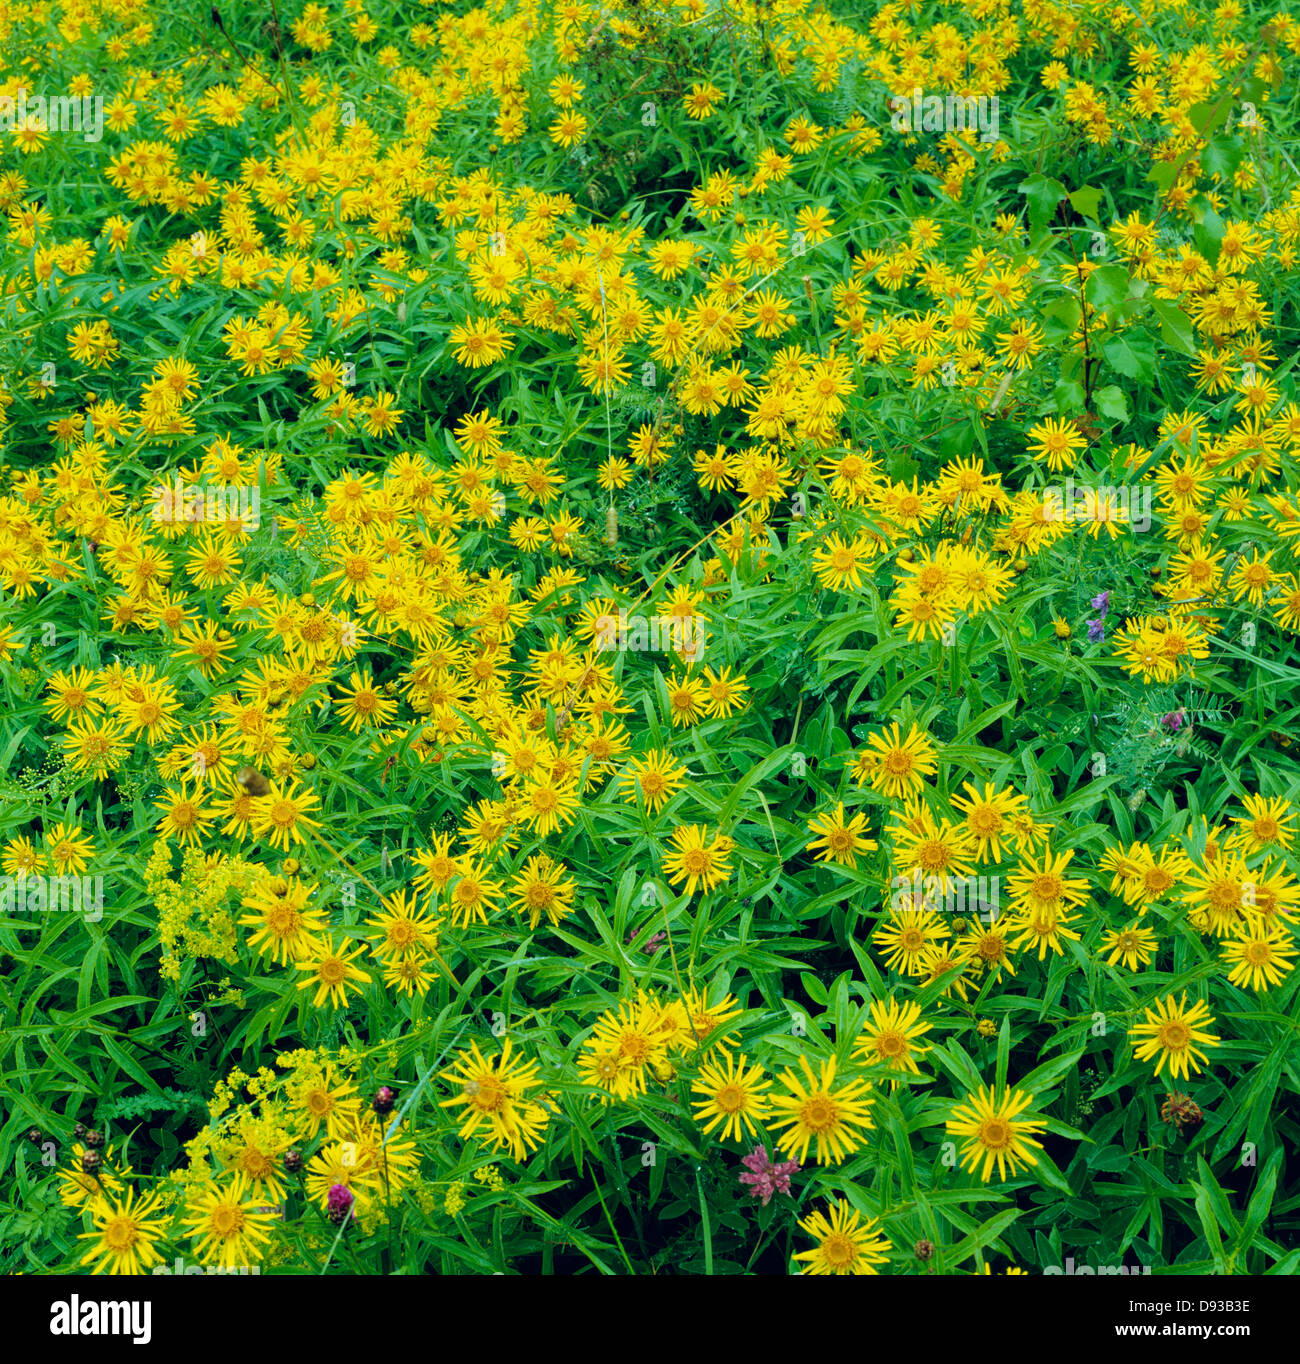 Inula salicina on green grass, full frame Stock Photo